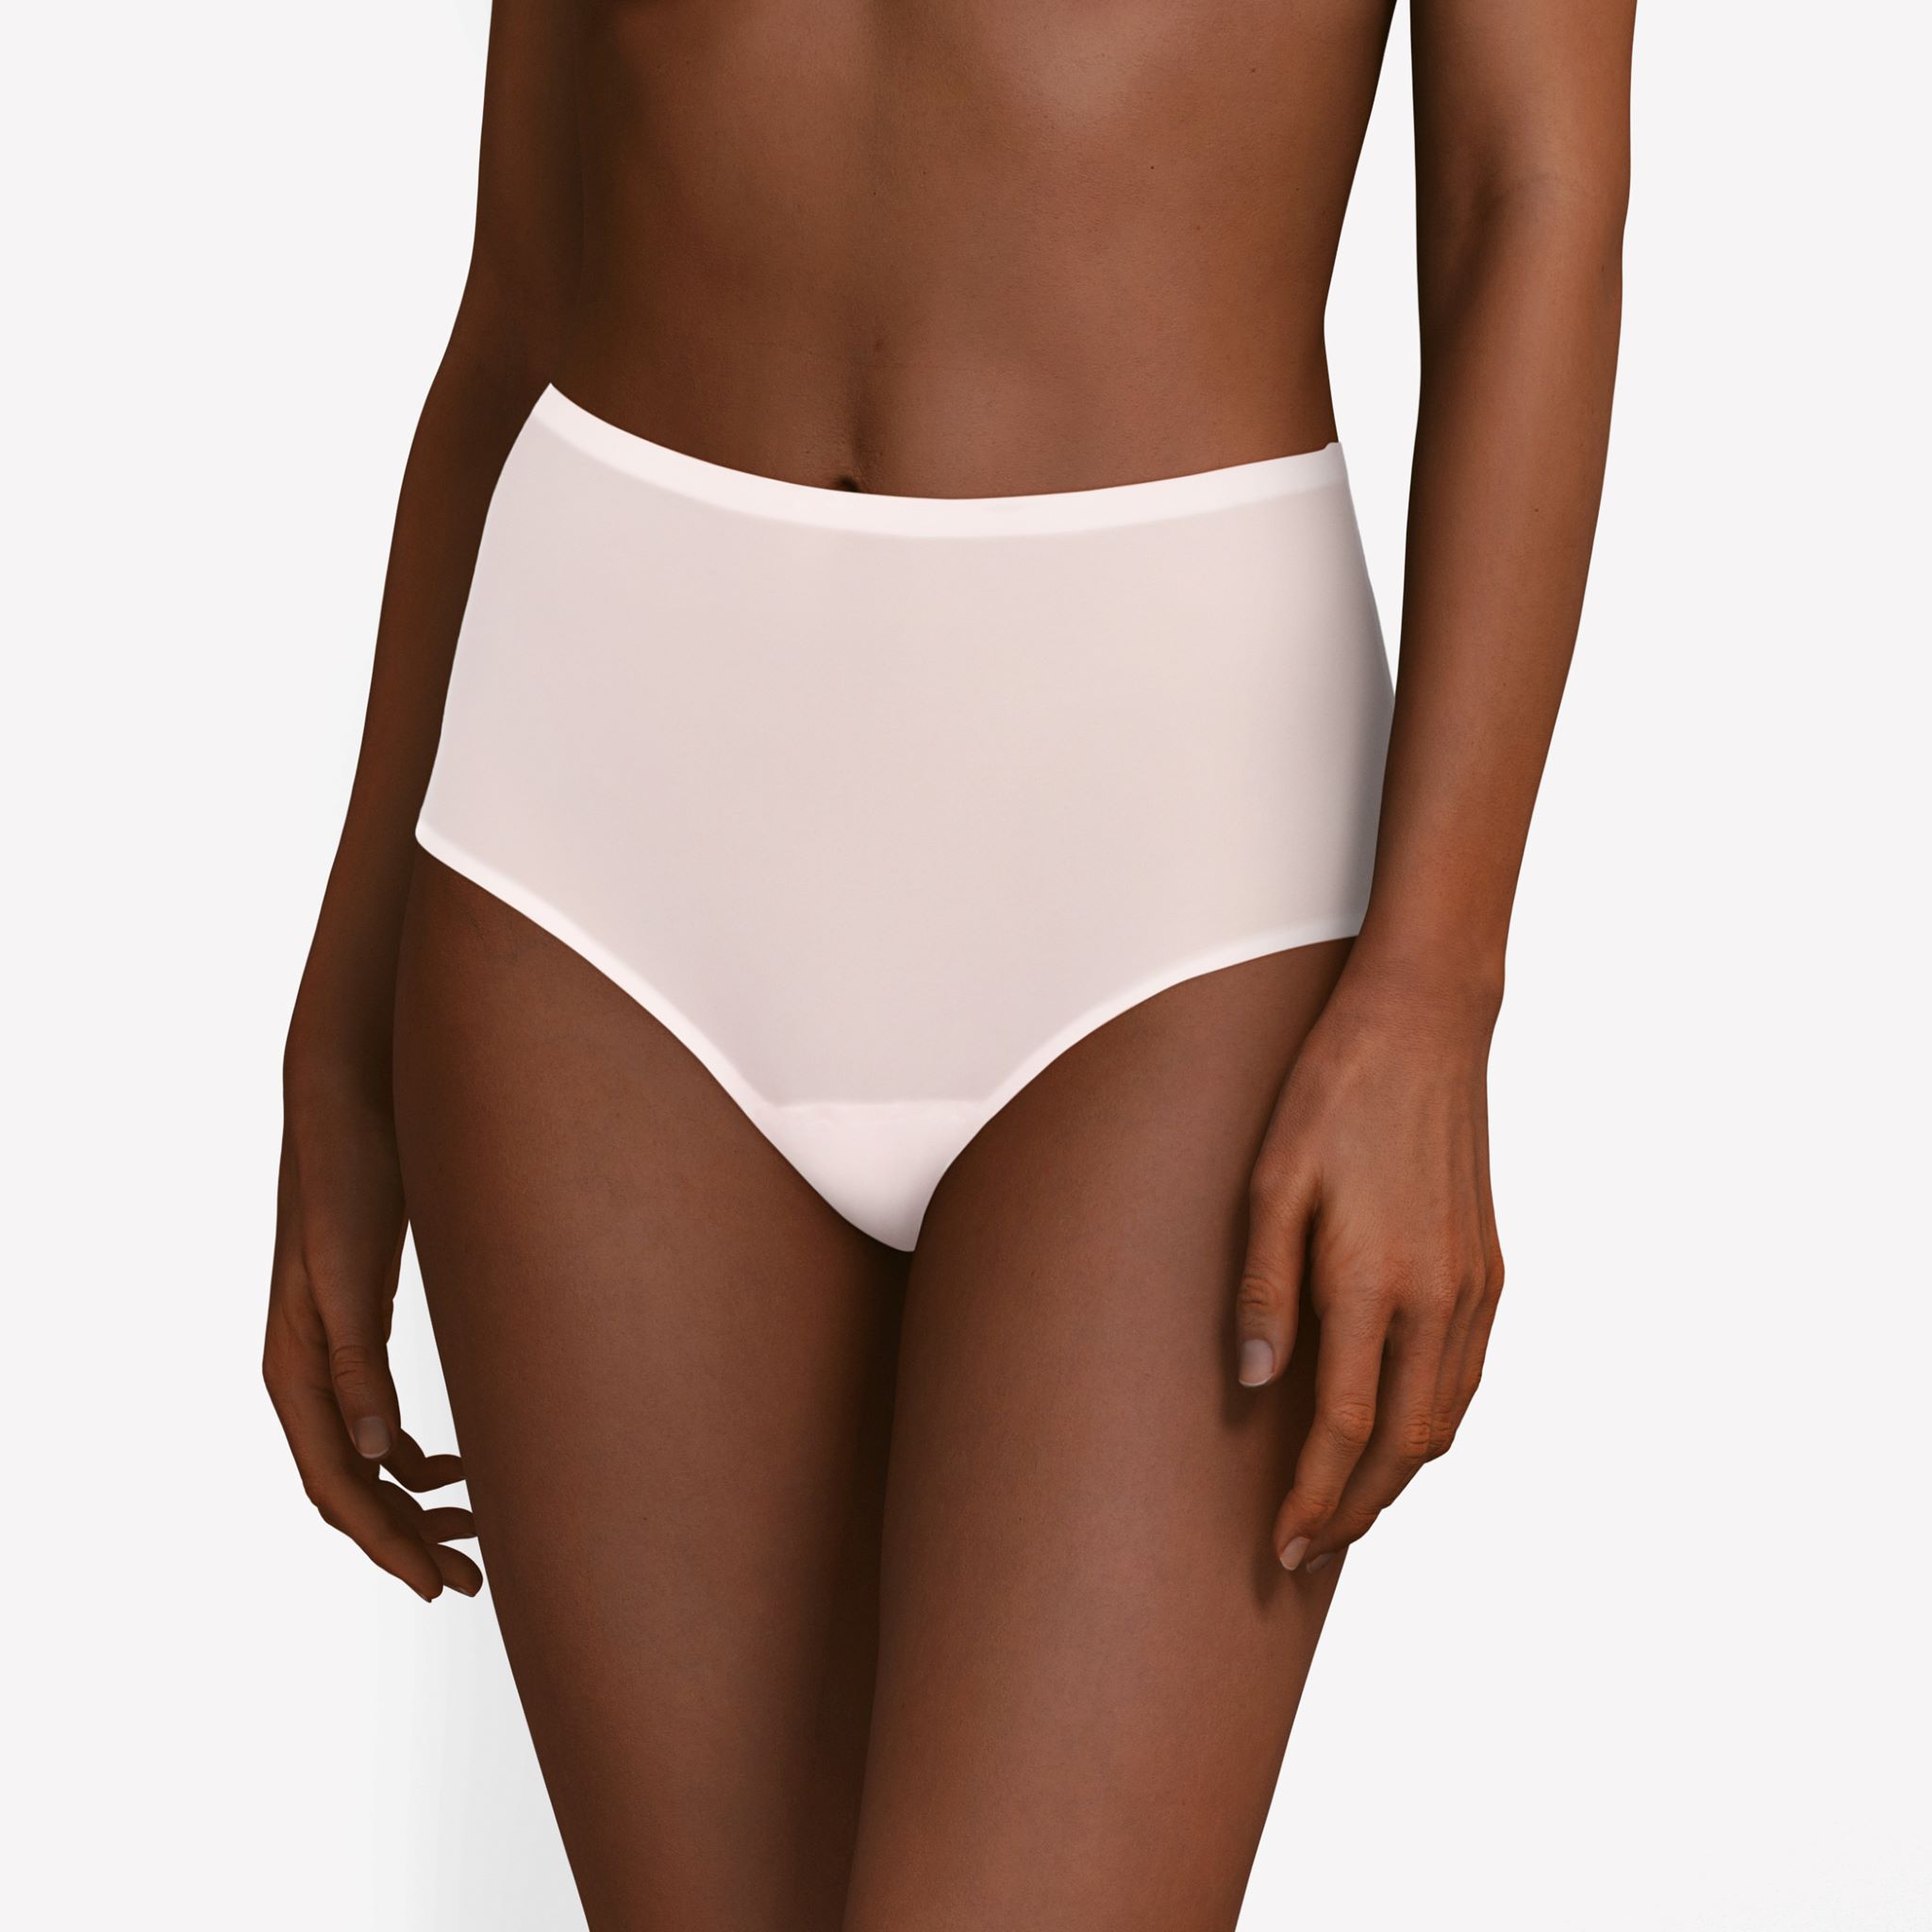 Women Underwear Print Stretch Soft Full Coverage Moisture-Wicking Panties  For Women,Pink,XXL 